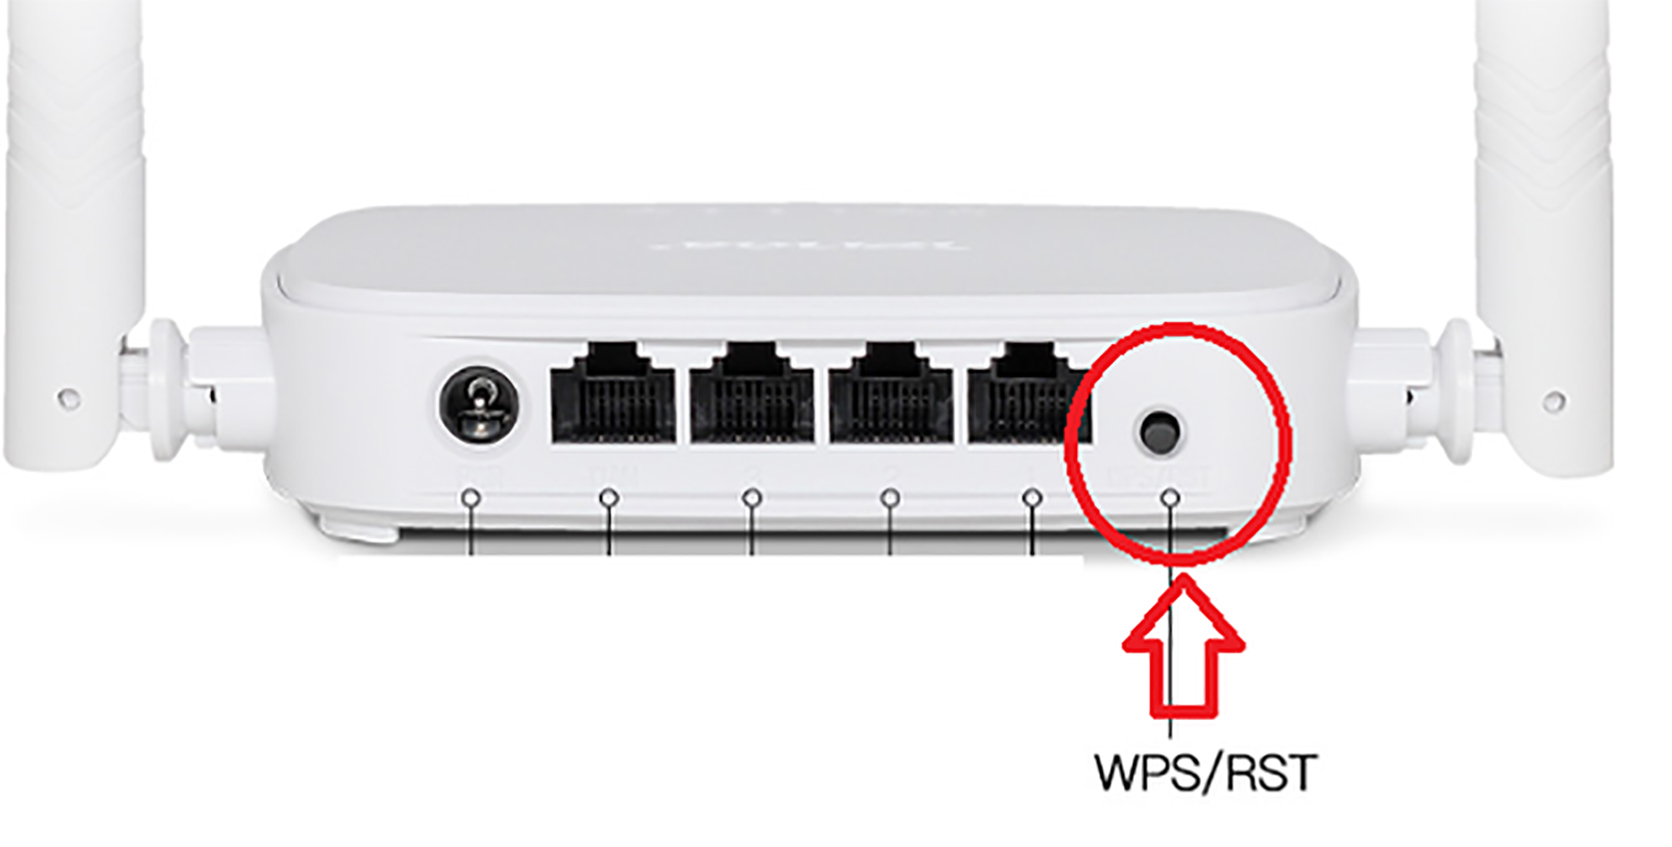 Wps wcm connect. Tenda n301 WPS. Что такое WIFI WPS на роутере. Что такое кнопка WPS на роутере Хуавей. Кнопка WPS на роутере Tenda.